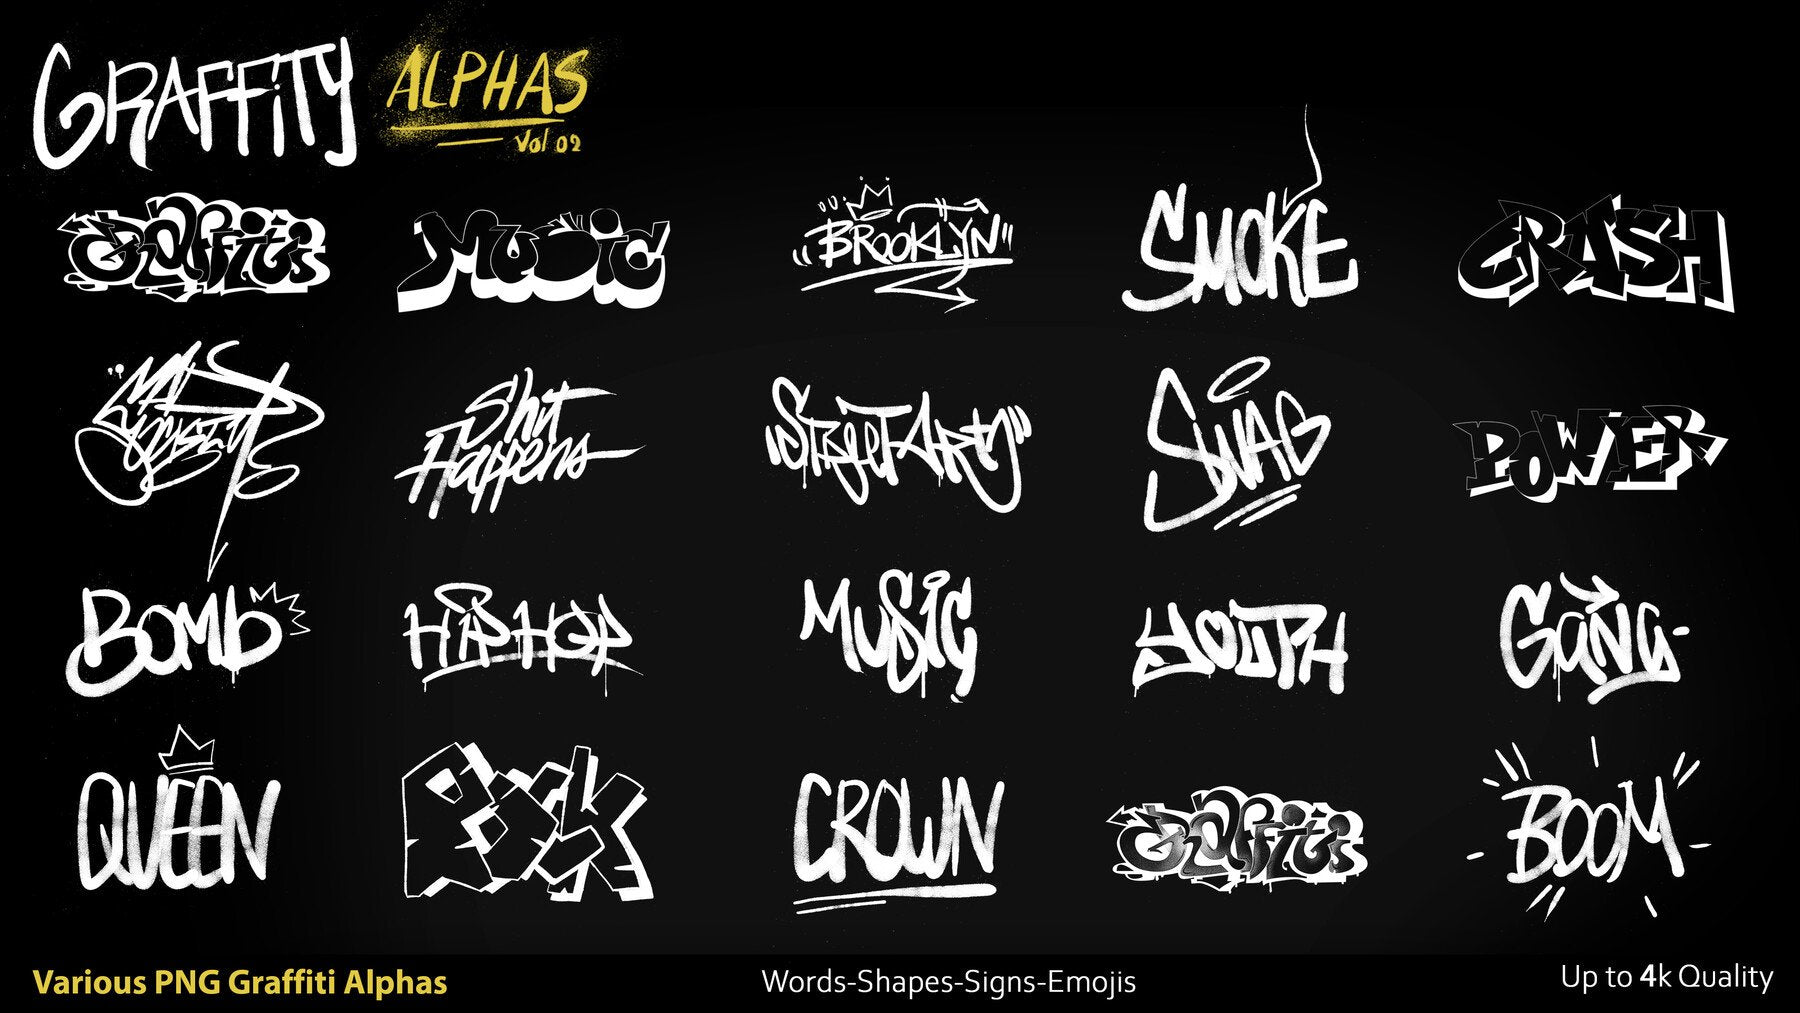 Graffiti Alphas Vol.2